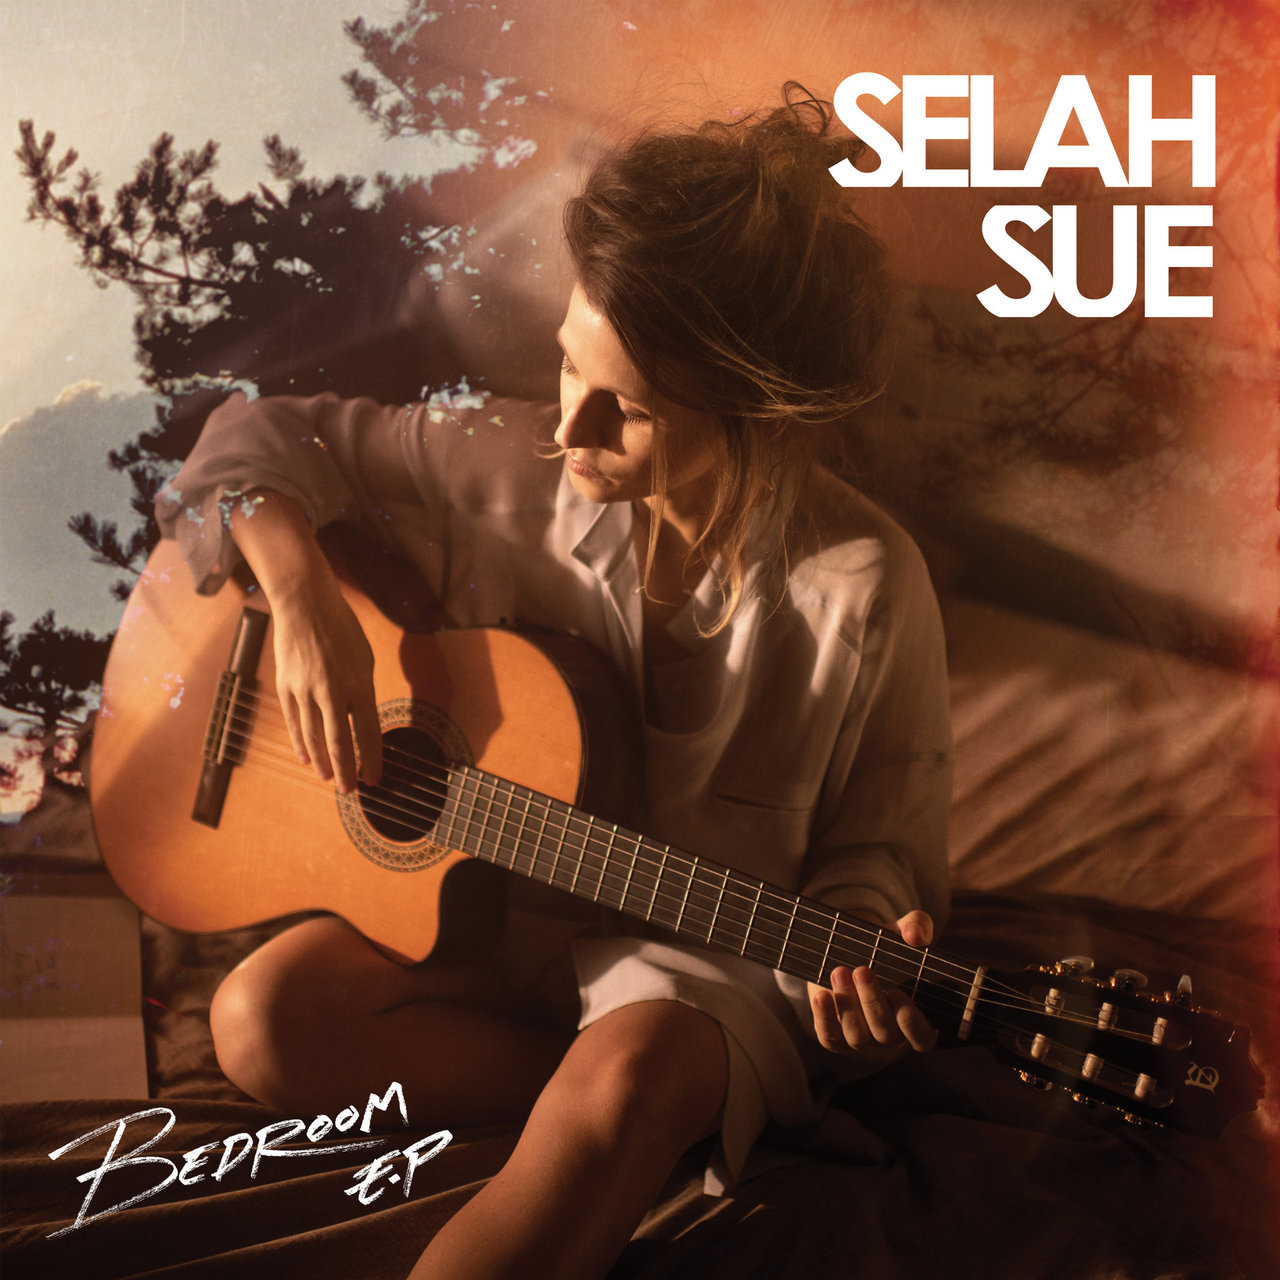 Selah Sue Bedroom EP cover artwork